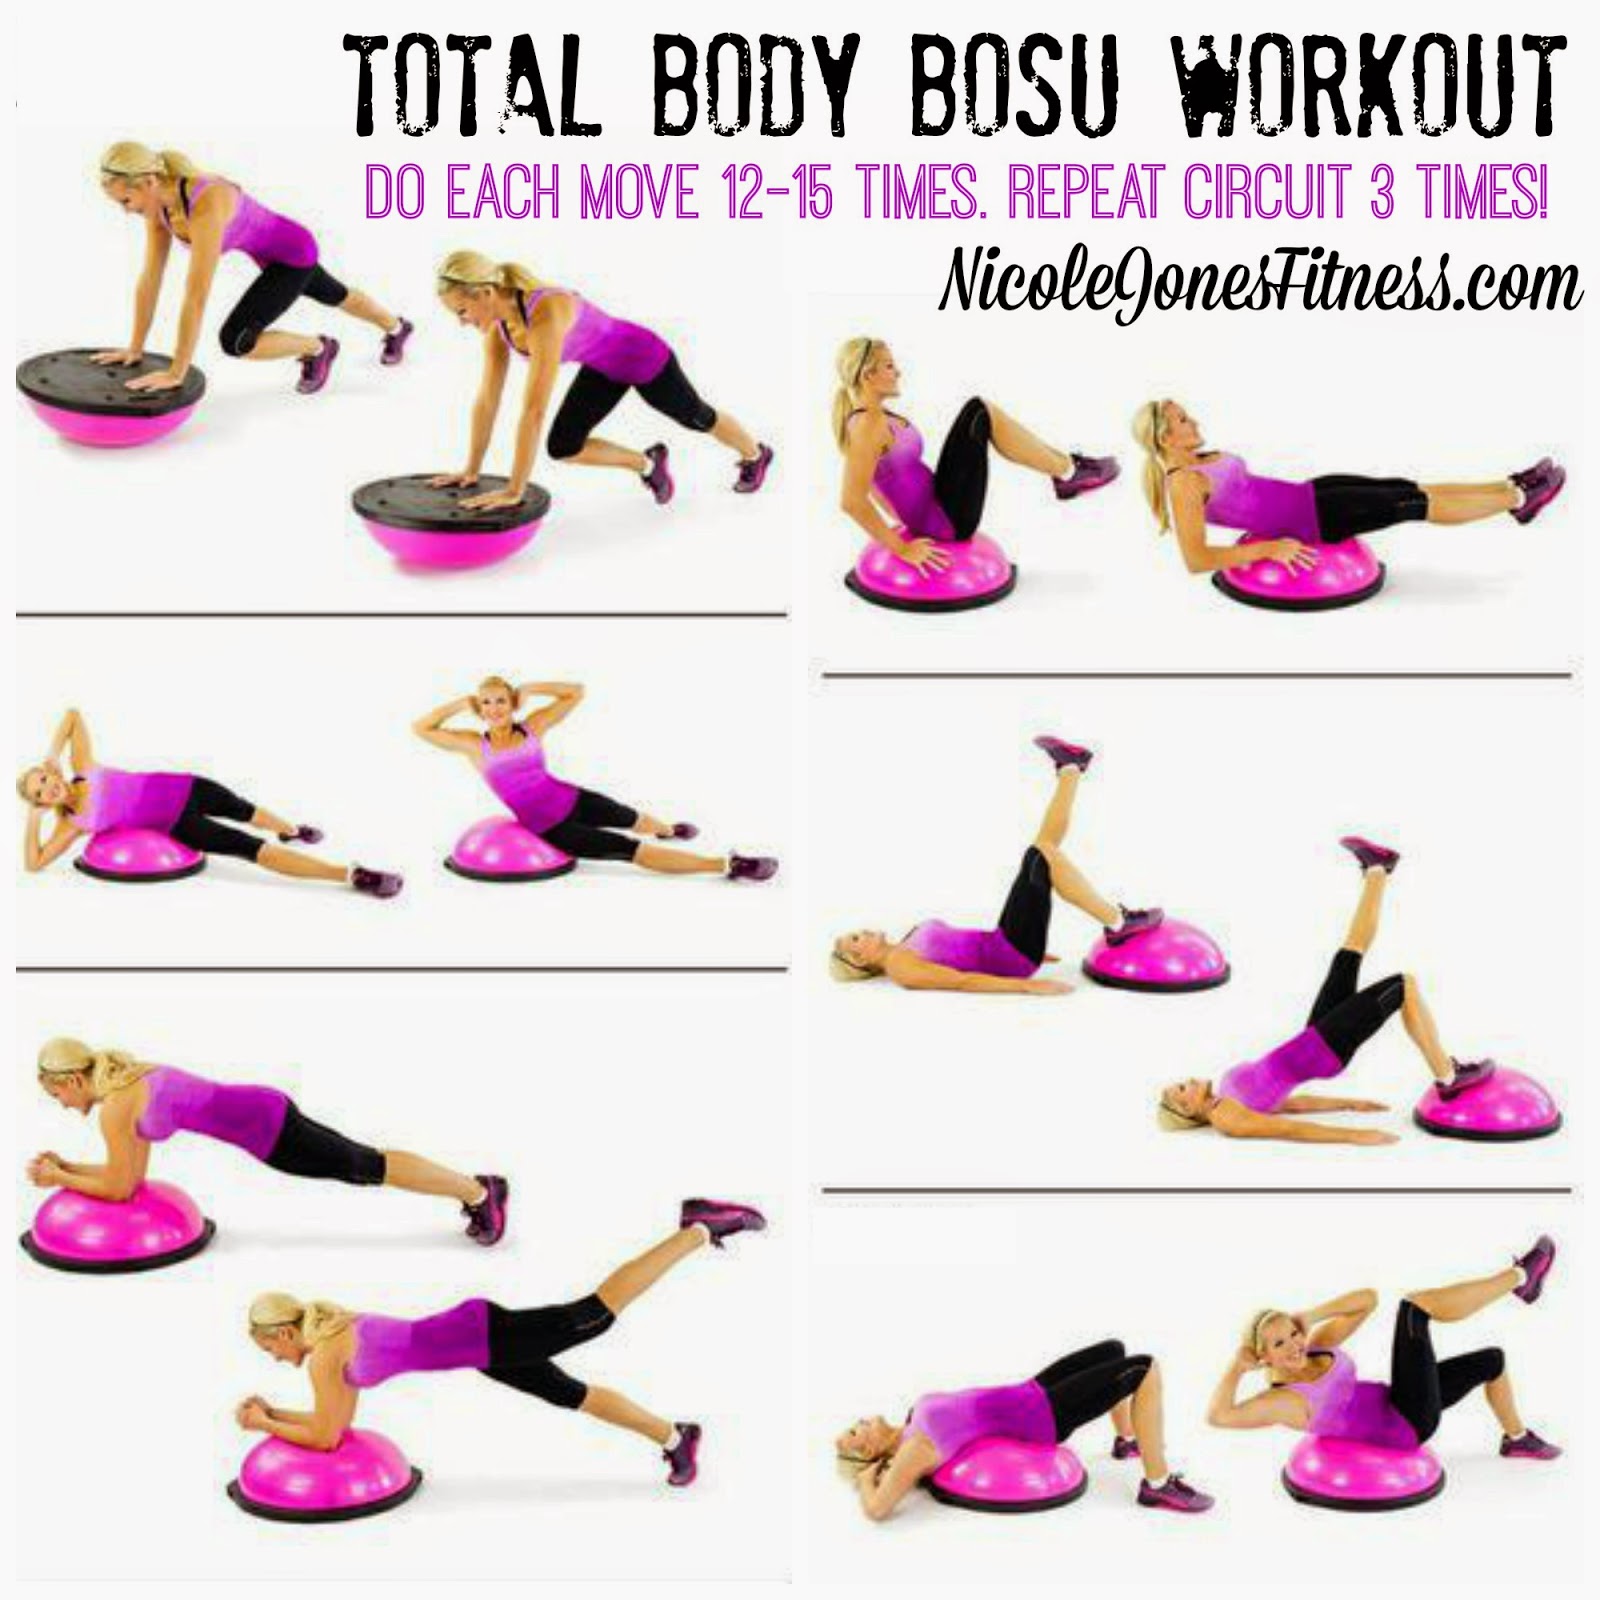 Nicole Jones: Total Body Bosu Workout